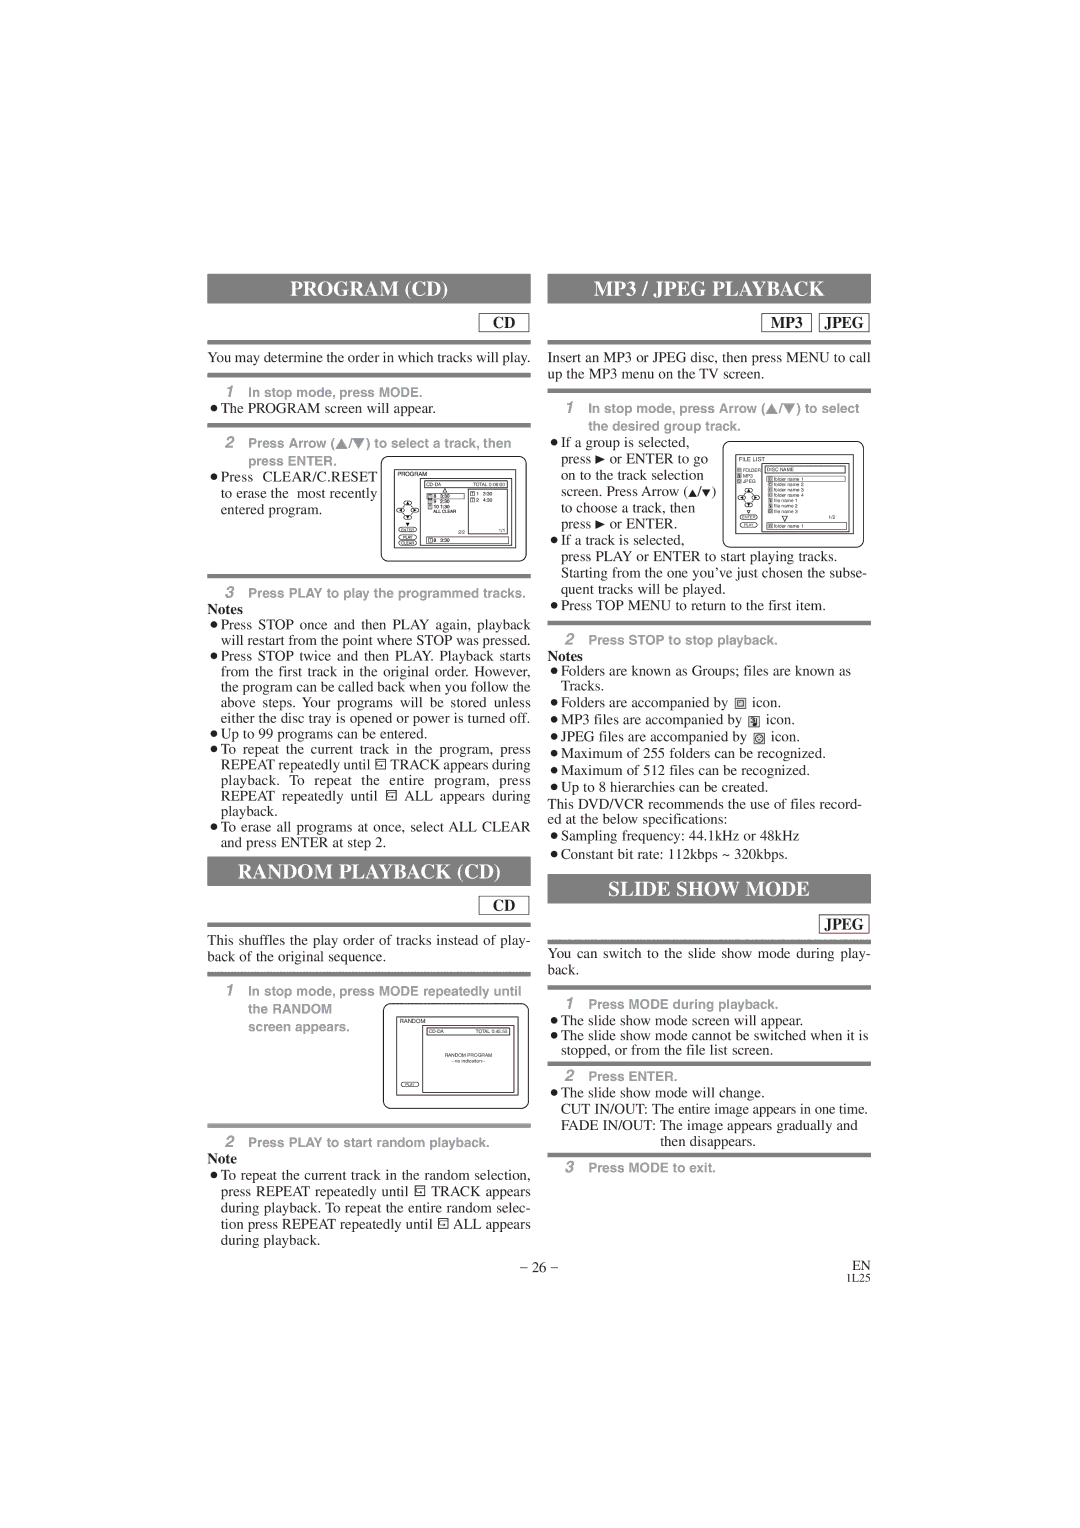 Hitachi DV PF74U instruction manual Program CD, Random Playback CD, Slide Show Mode 